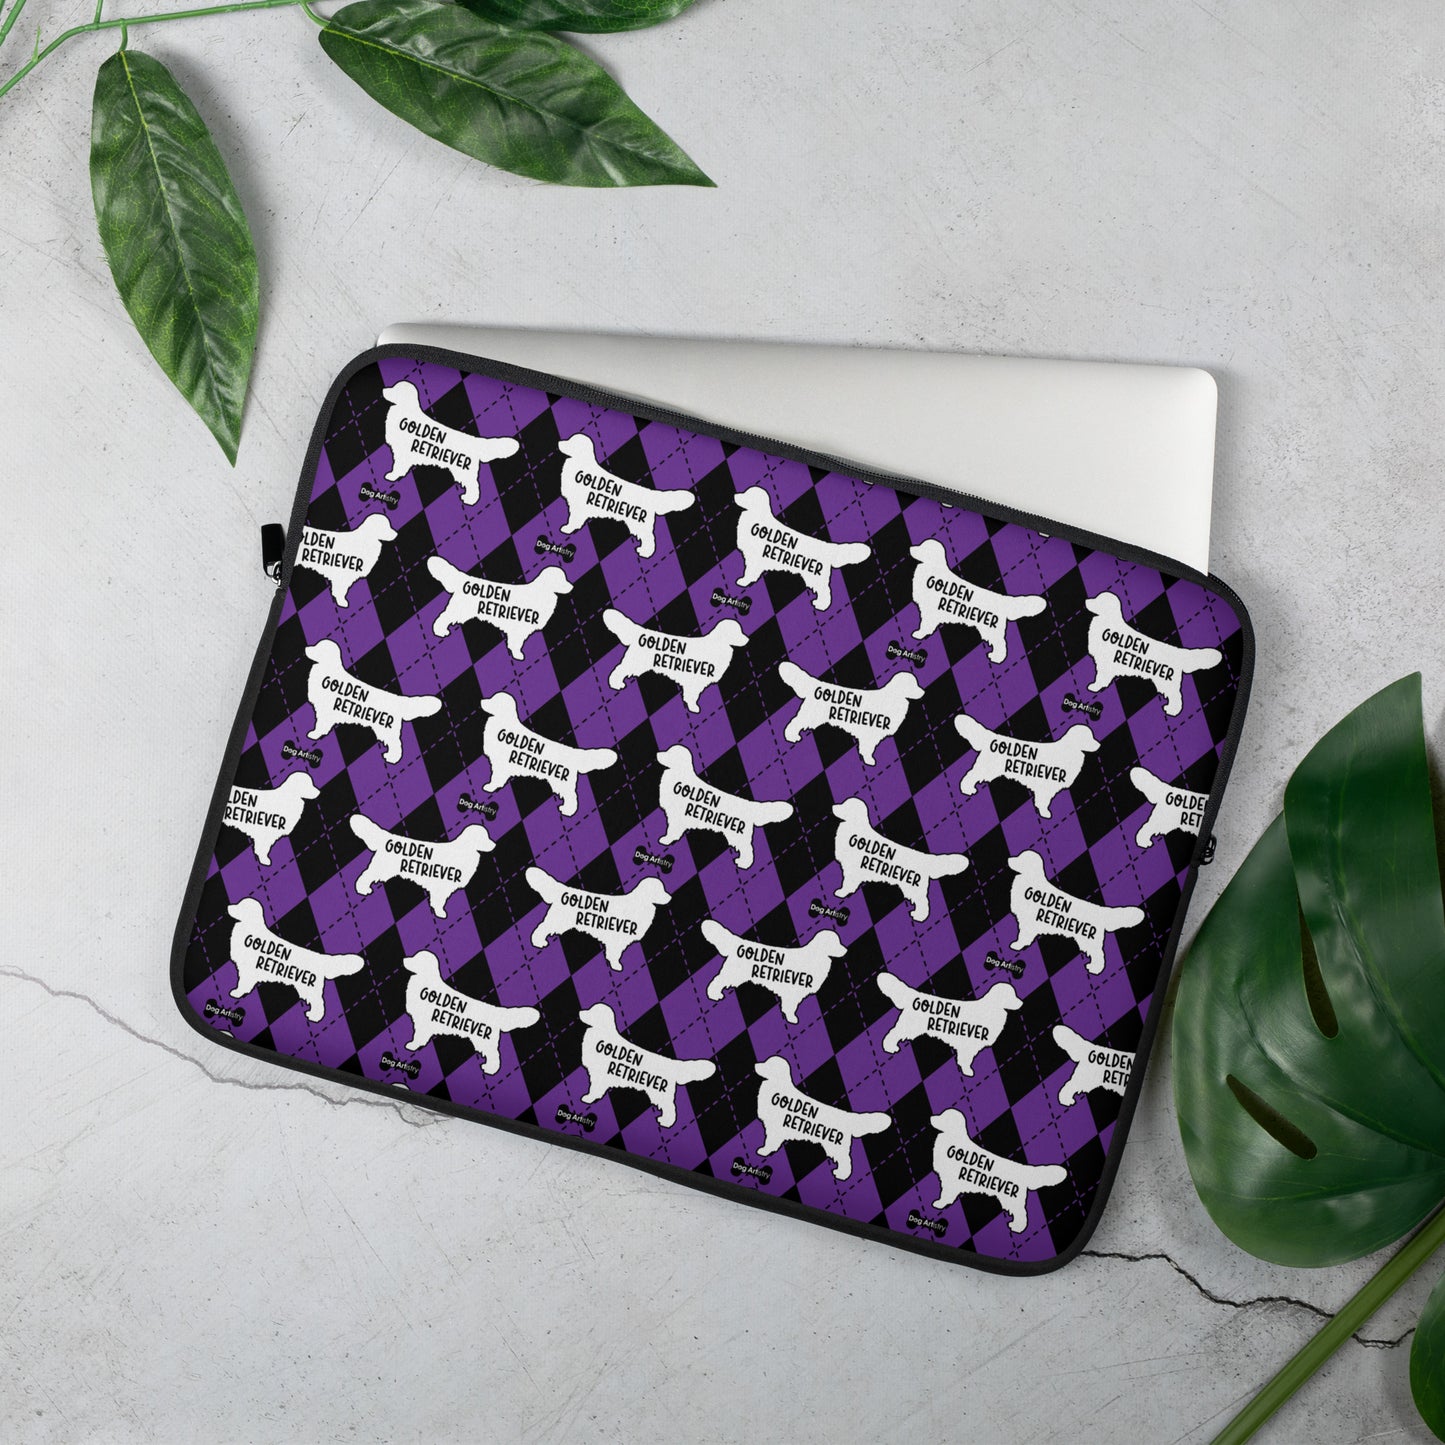 Golden Retriever purple and black argyle laptop sleeve by Dog Artistry